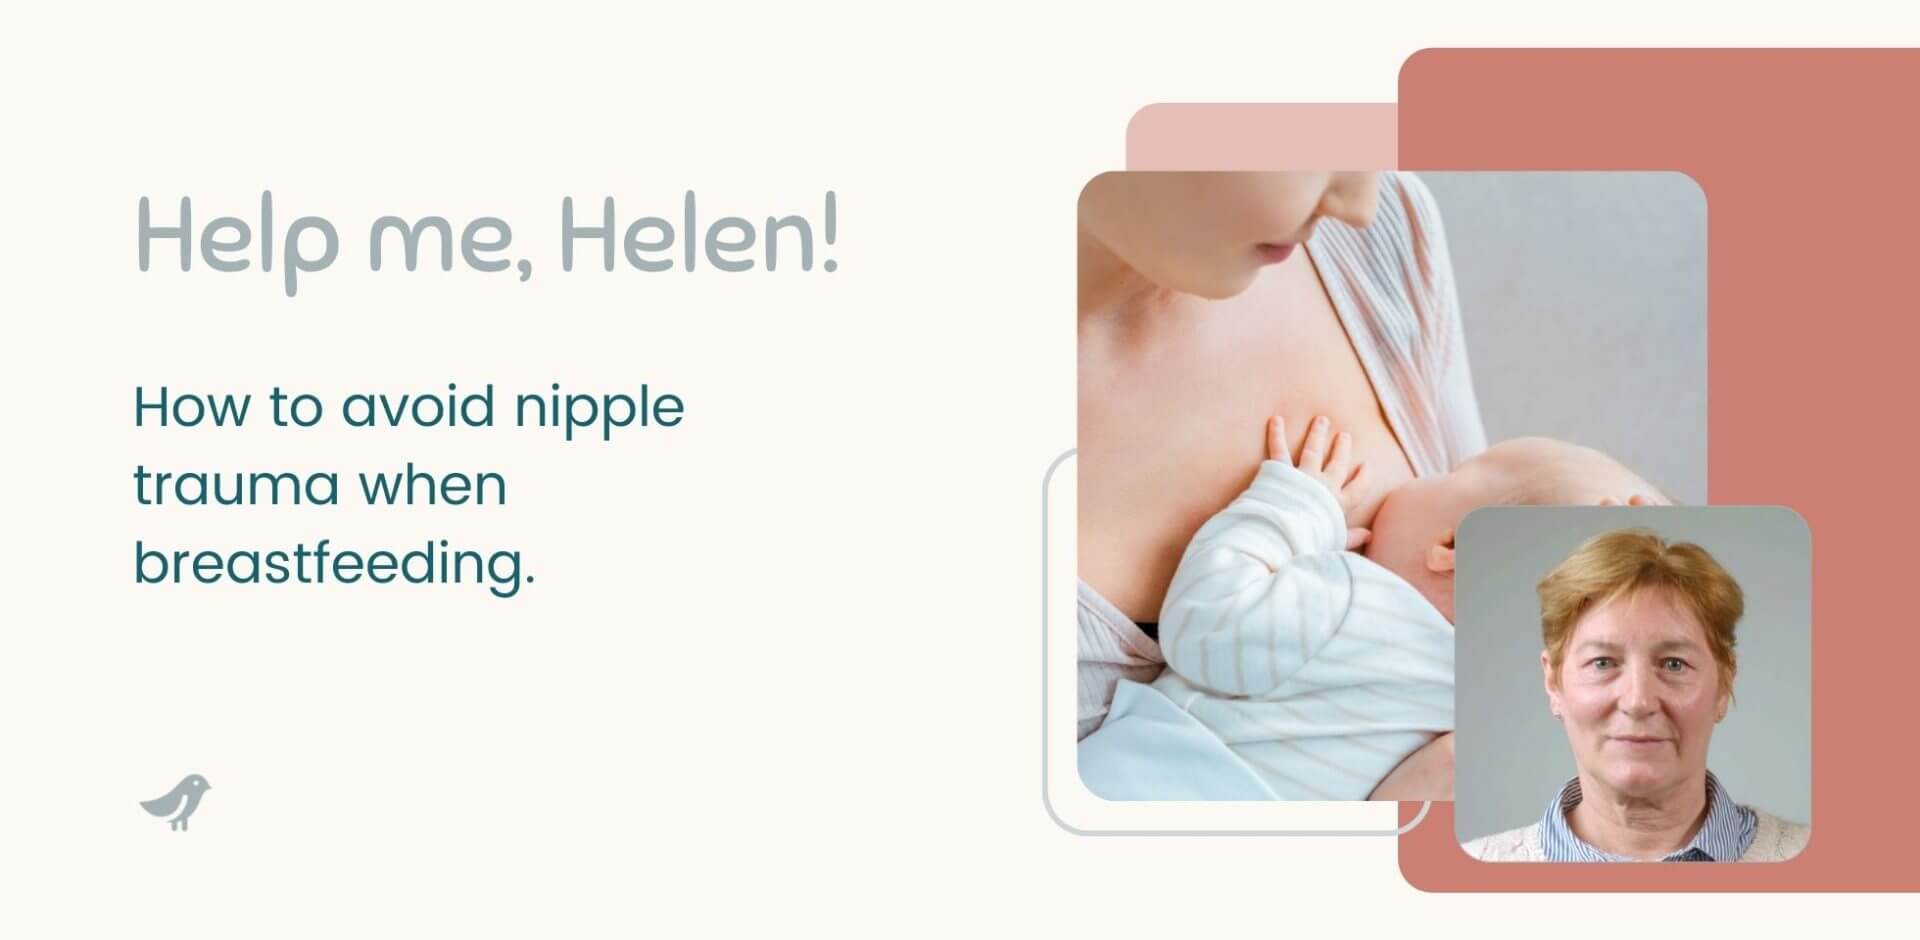 Help me, Helen! How to avoid nipple trauma when breastfeeding.